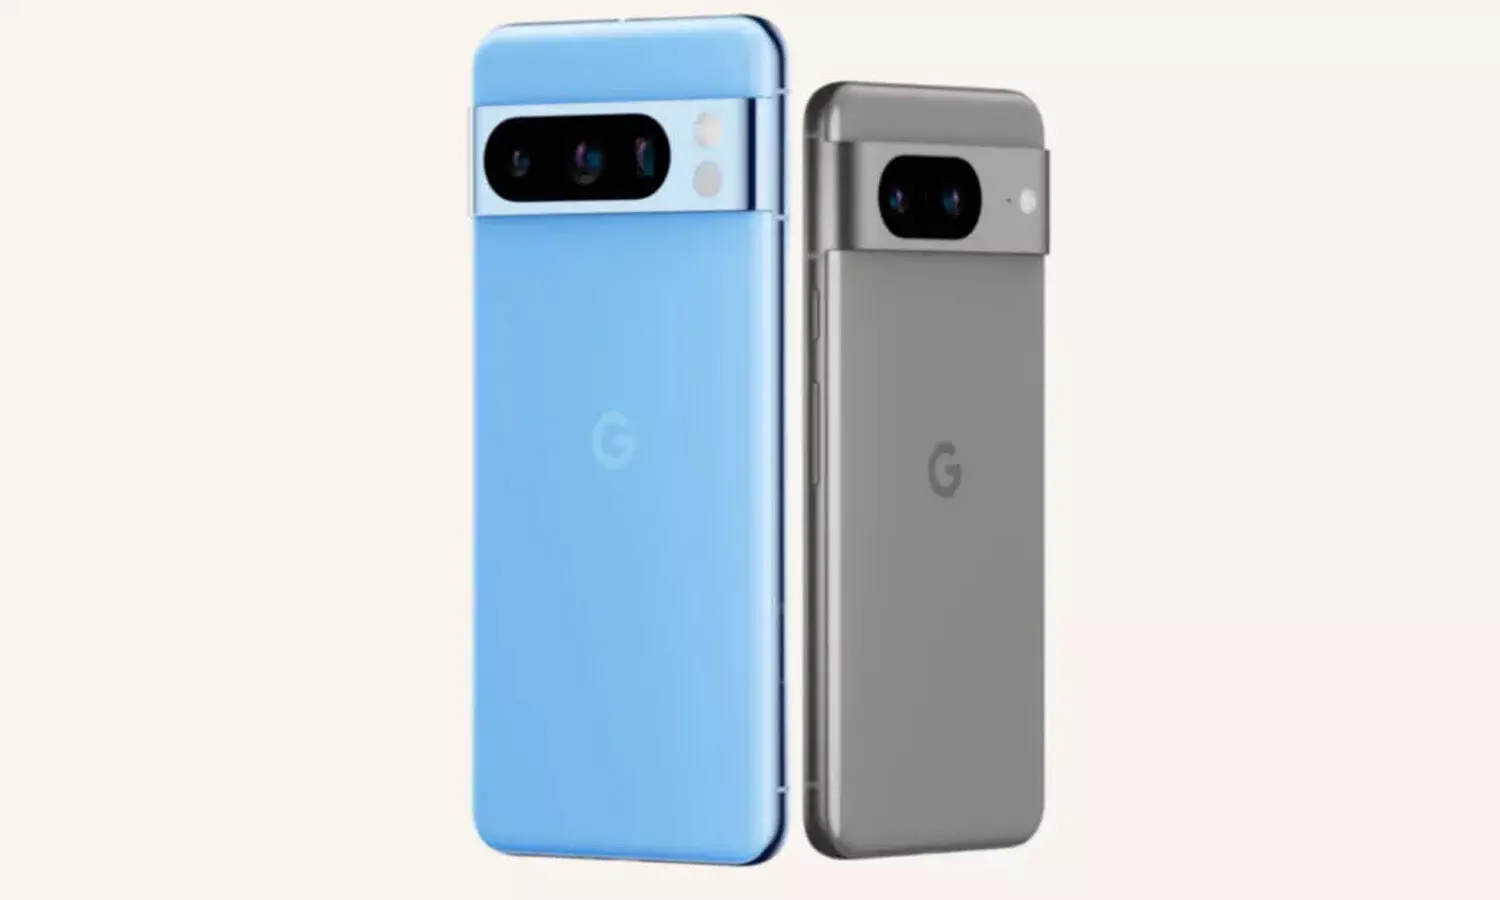 Google Pixel 8 Series Phones | మార్కెట్‌లోకి గూగుల్ పిక్సెల్‌8 సిరీస్ ఫోన్లు.. బ్యాంక్ డిస్కౌంట్లు.. ఎక్స్చేంజ్ బోన‌స్‌లు ఇలా..!